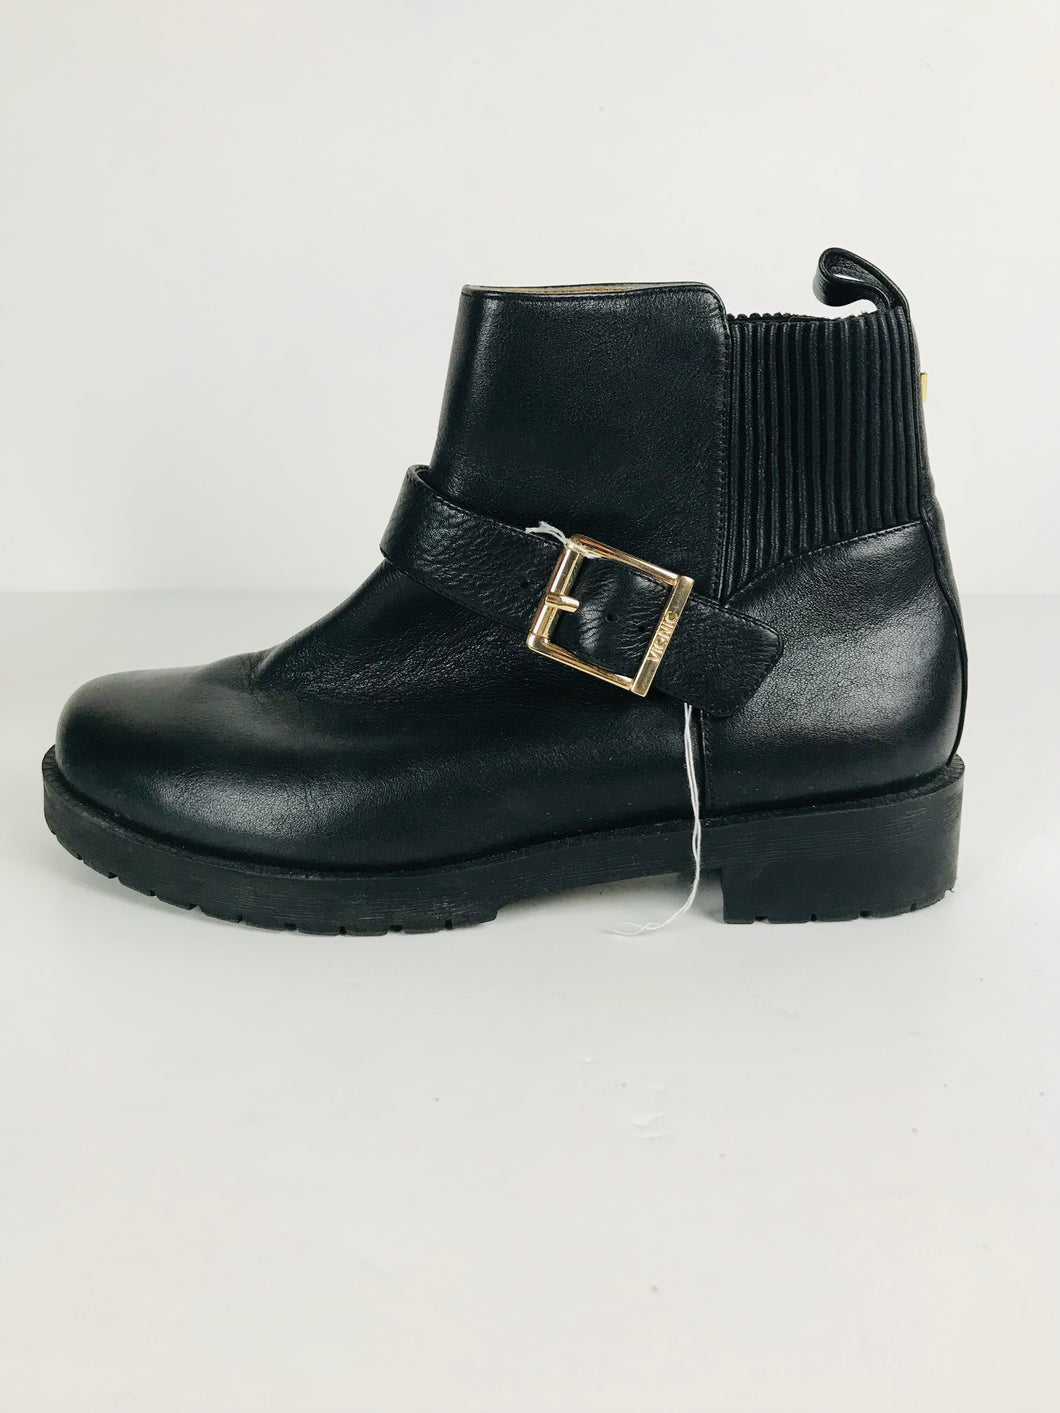 Vionic Women's Ankle Boots | UK6 | Black